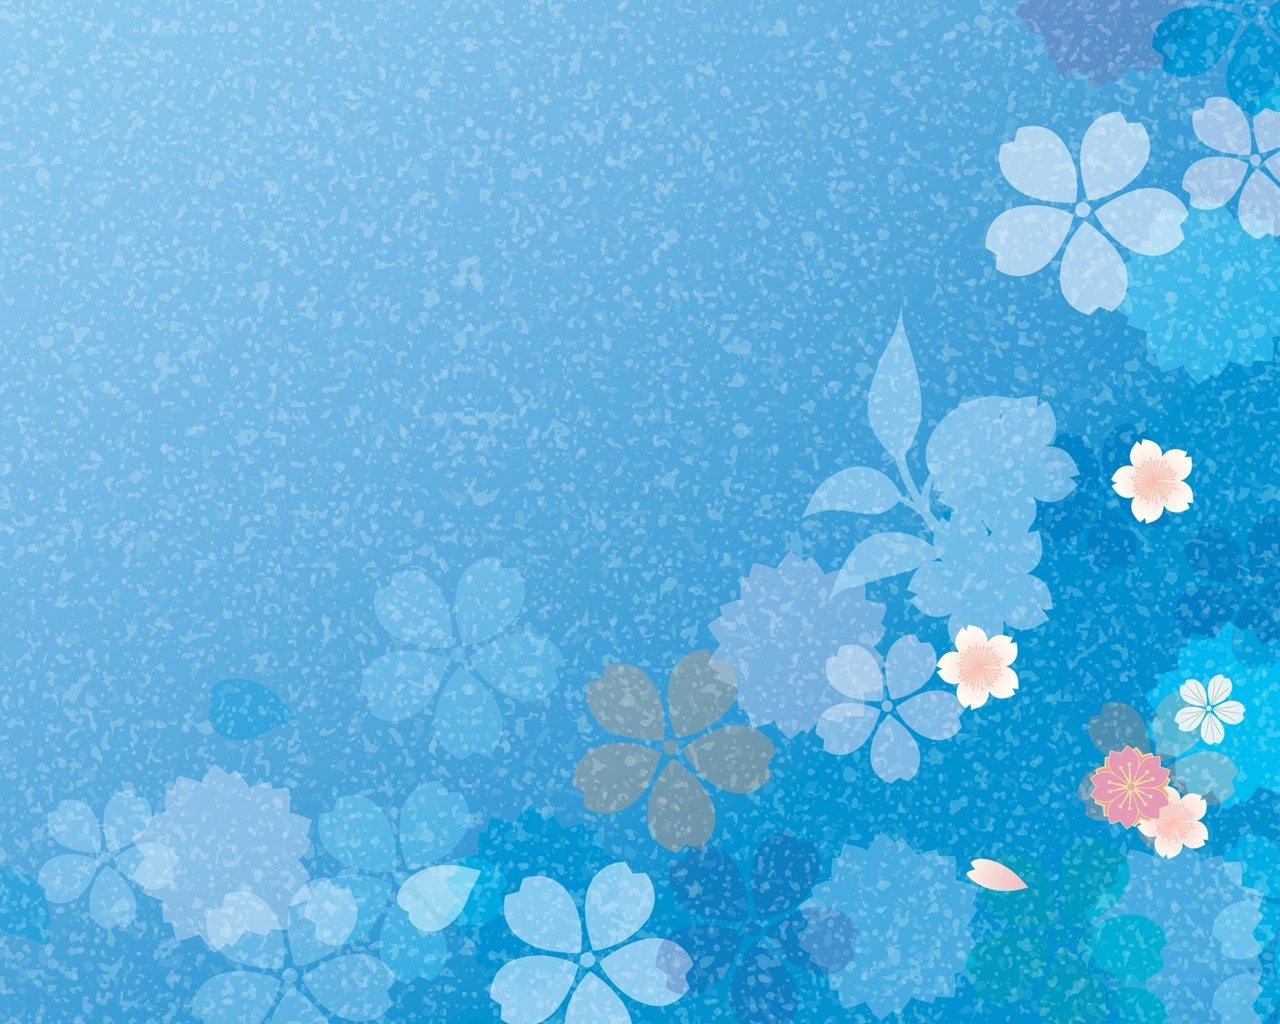  Free Downloa Flower Wallpaper Background Hd Desktop Widescreen For